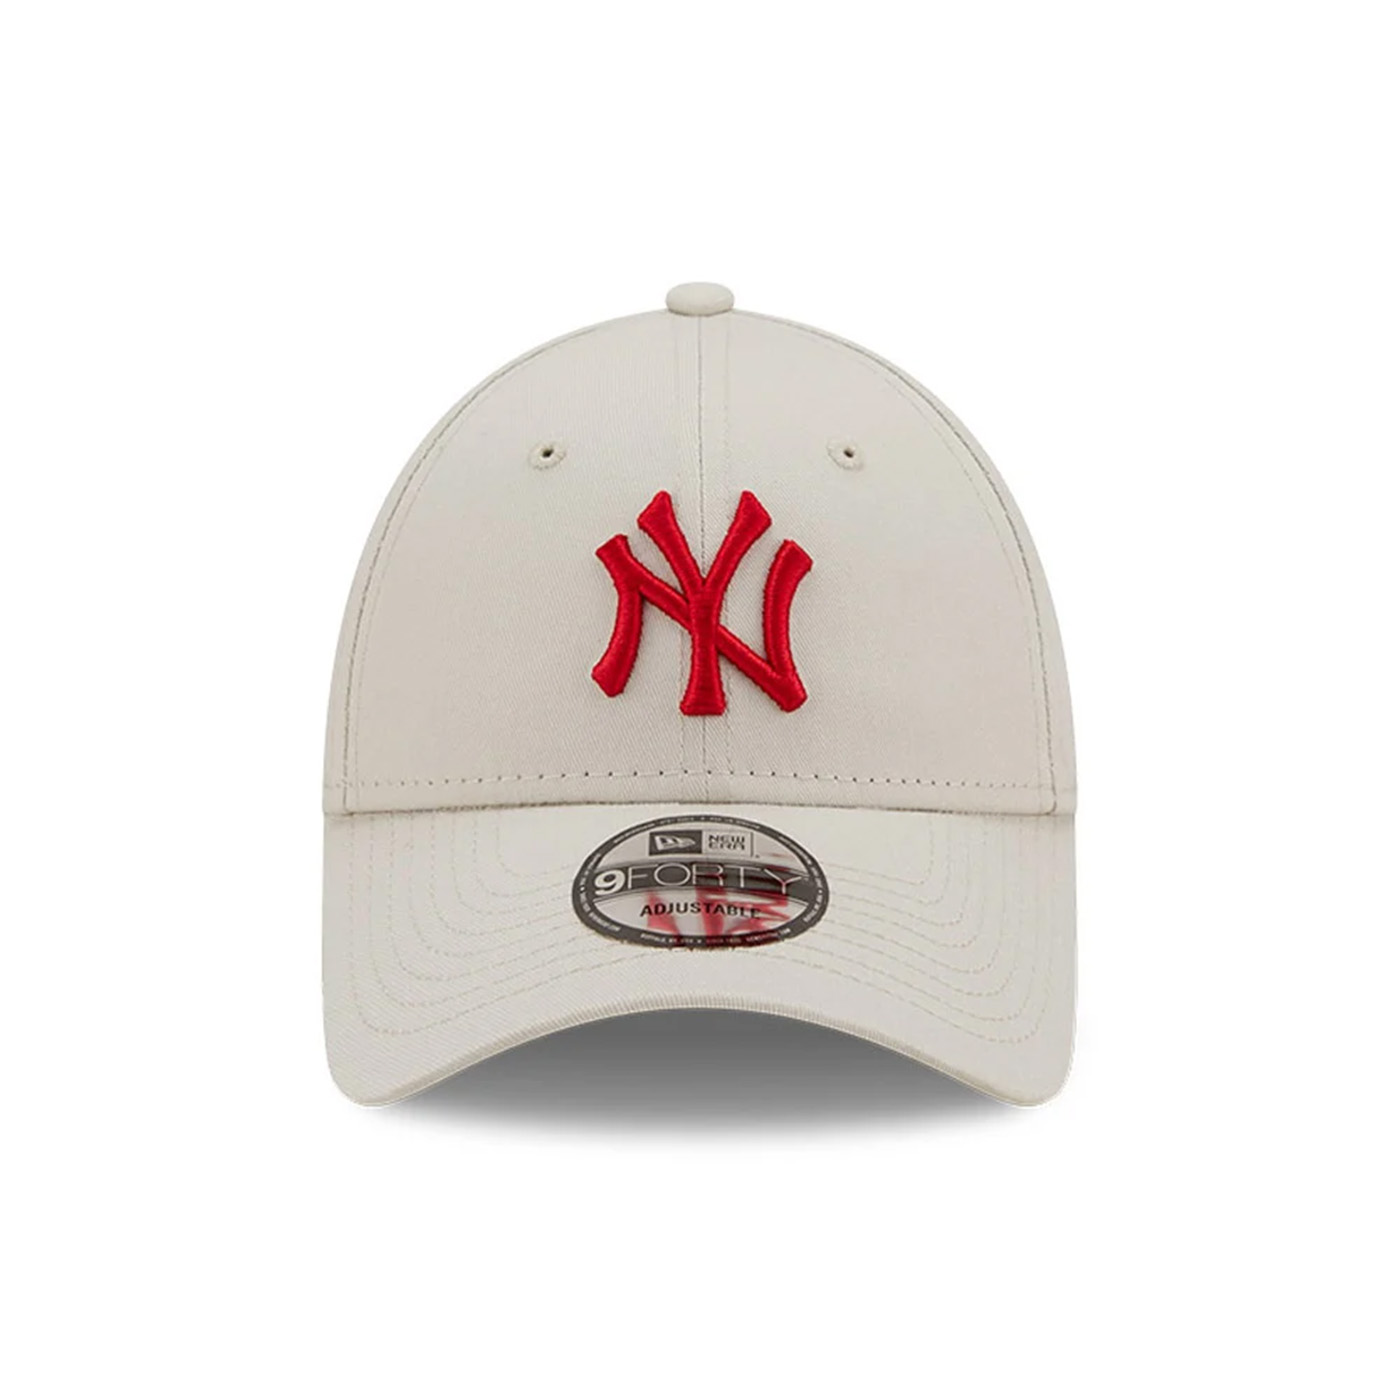 New Era 9FORTY New York Yankees Cap Stone / Red